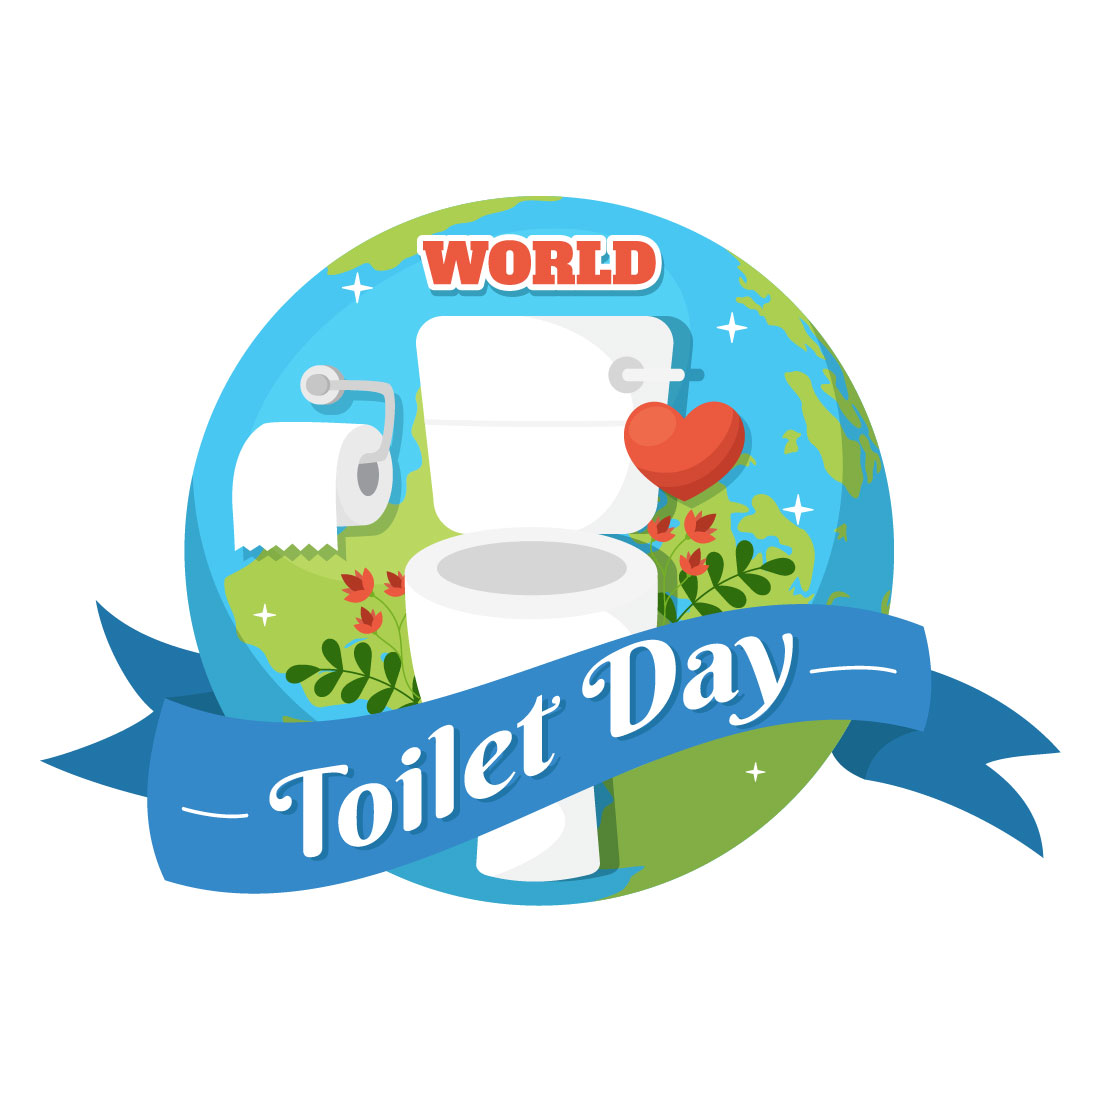 11 World Toilet Day Illustration cover image.